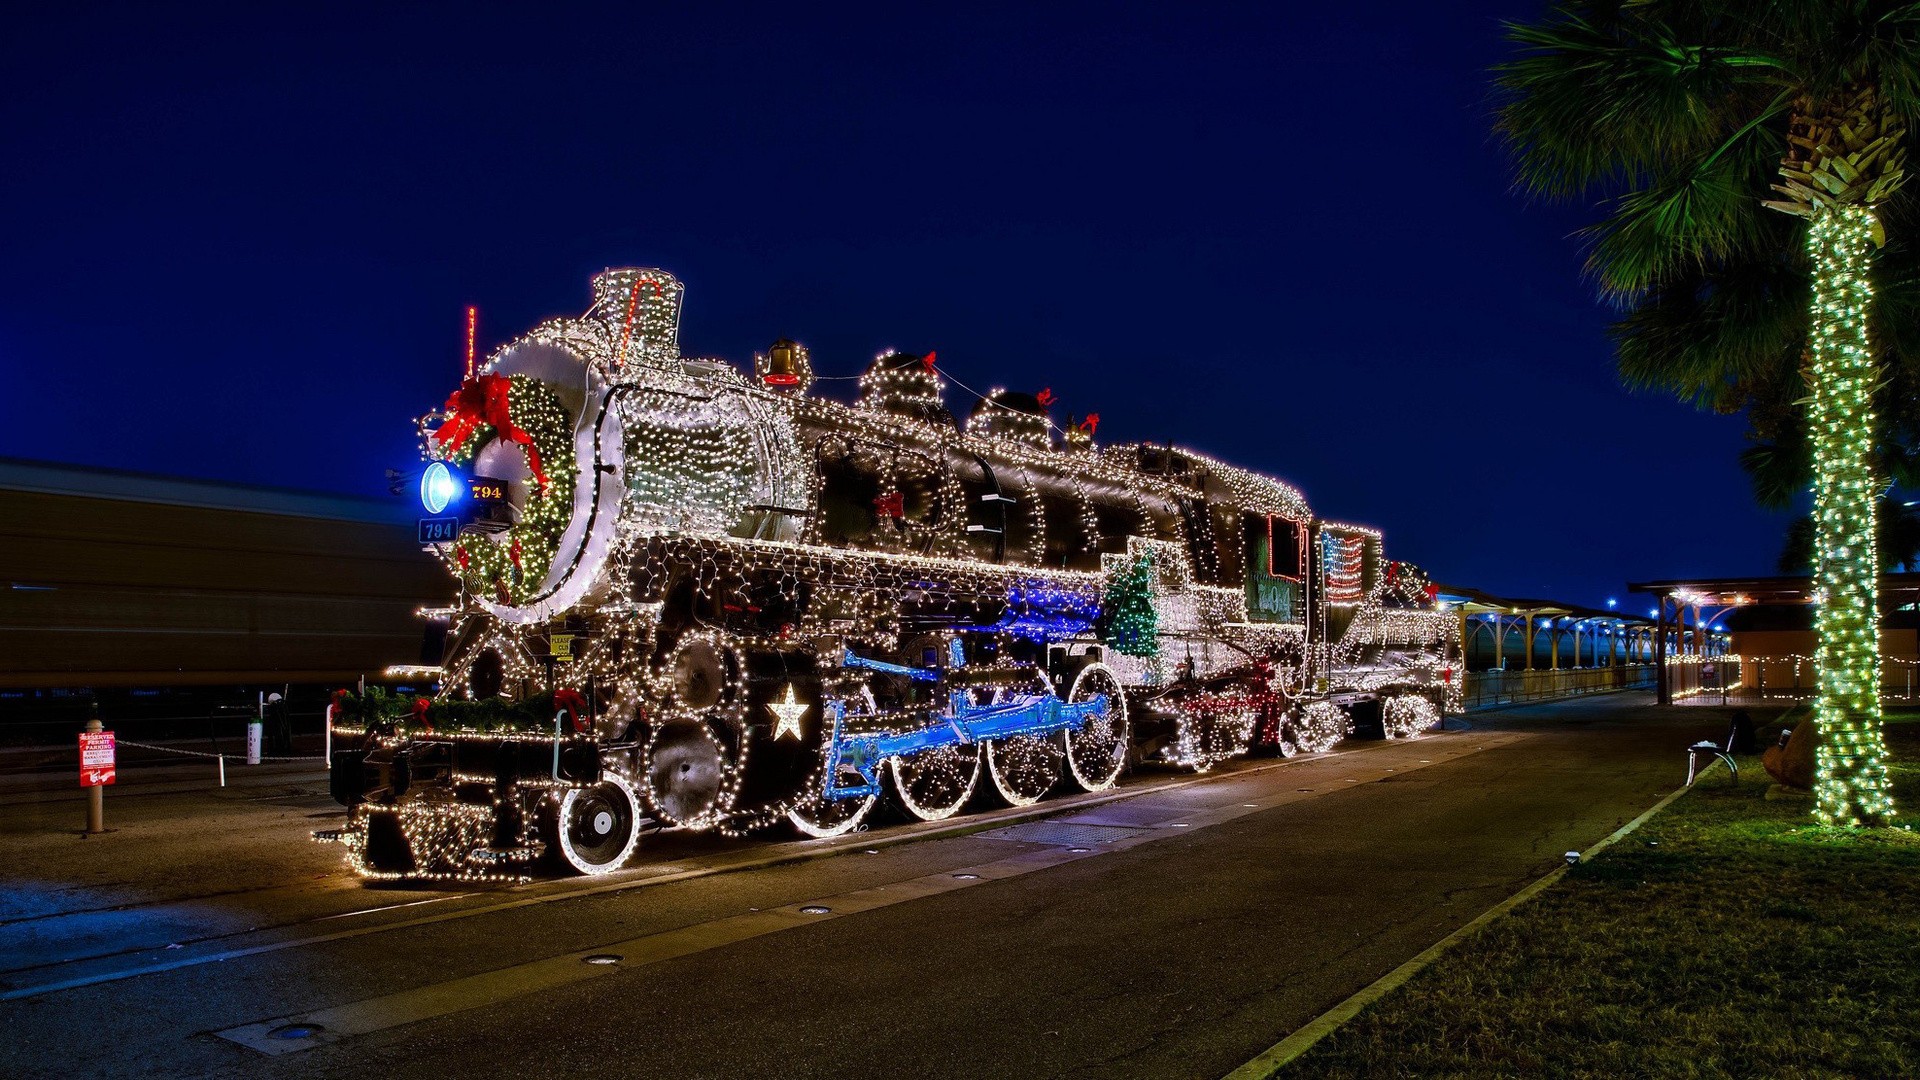 General 1920x1080 train steam locomotive Christmas lights Christmas holiday vehicle locomotive